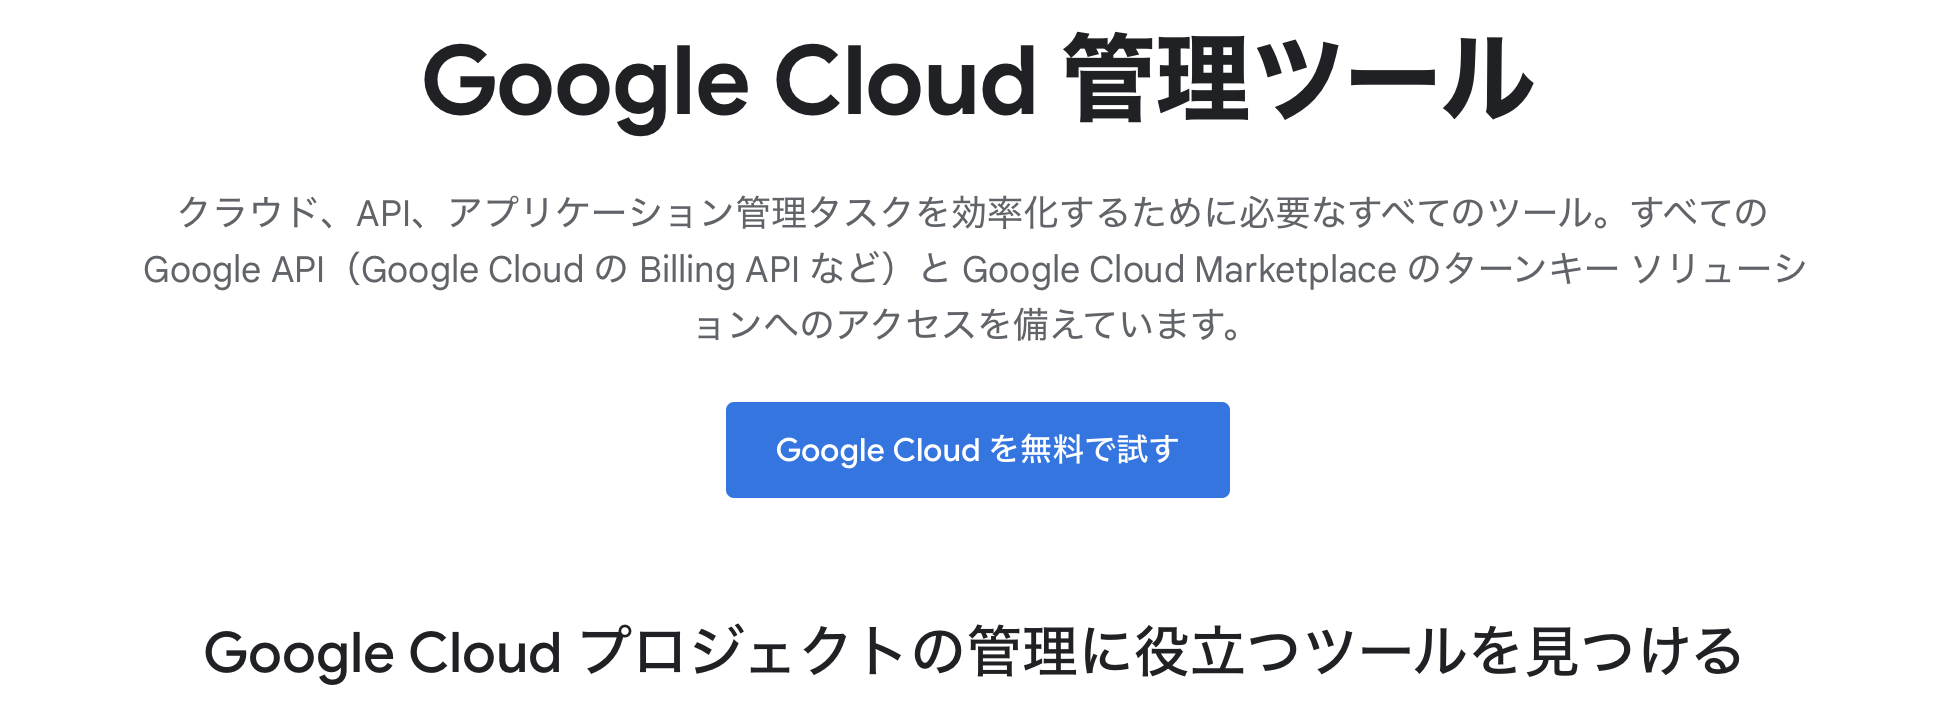 Google Cloud管理ツール